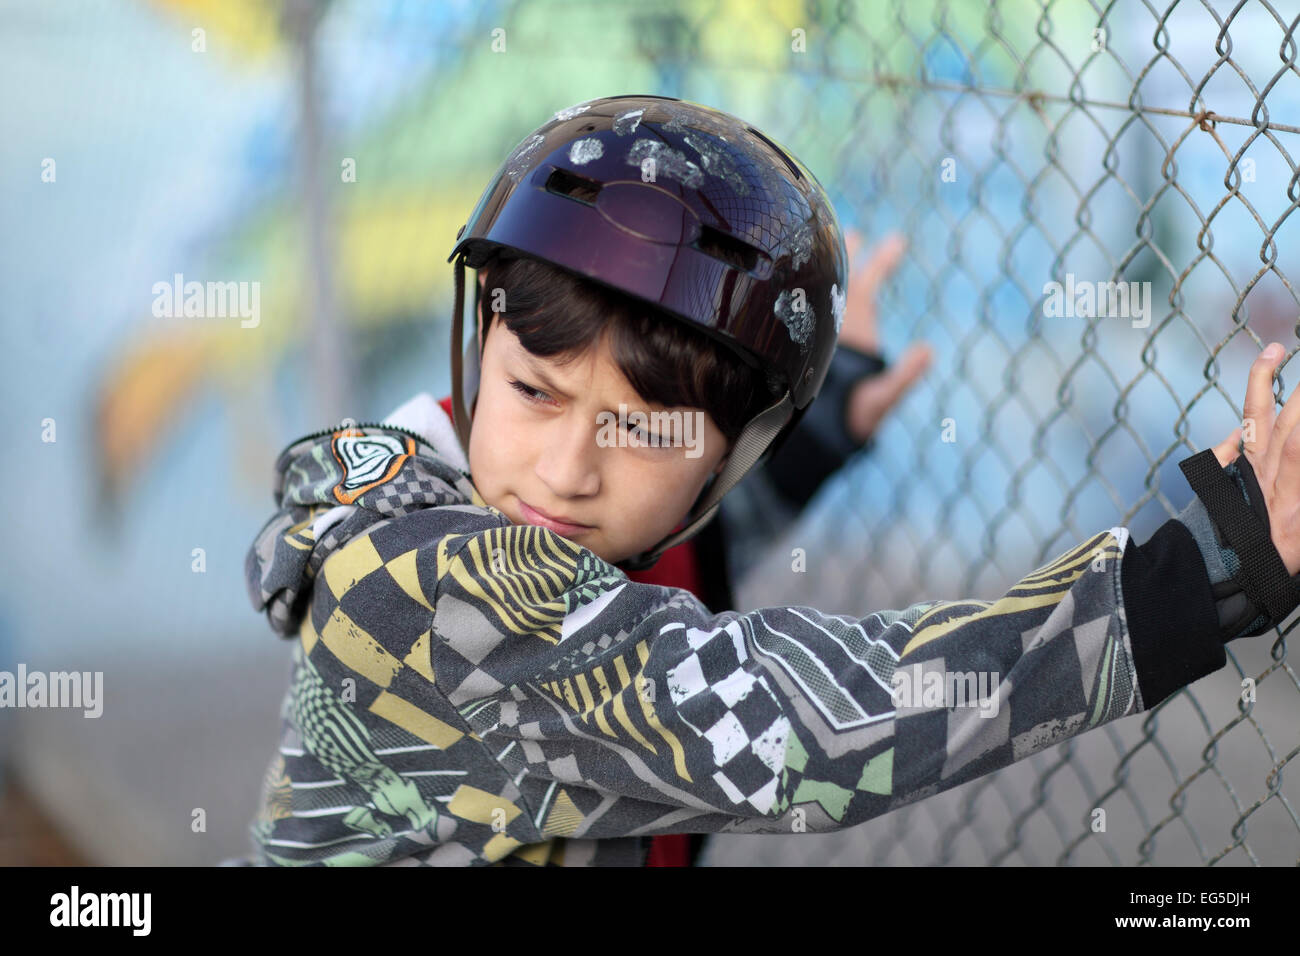 Young boy in skateboard helmet Stock Photo